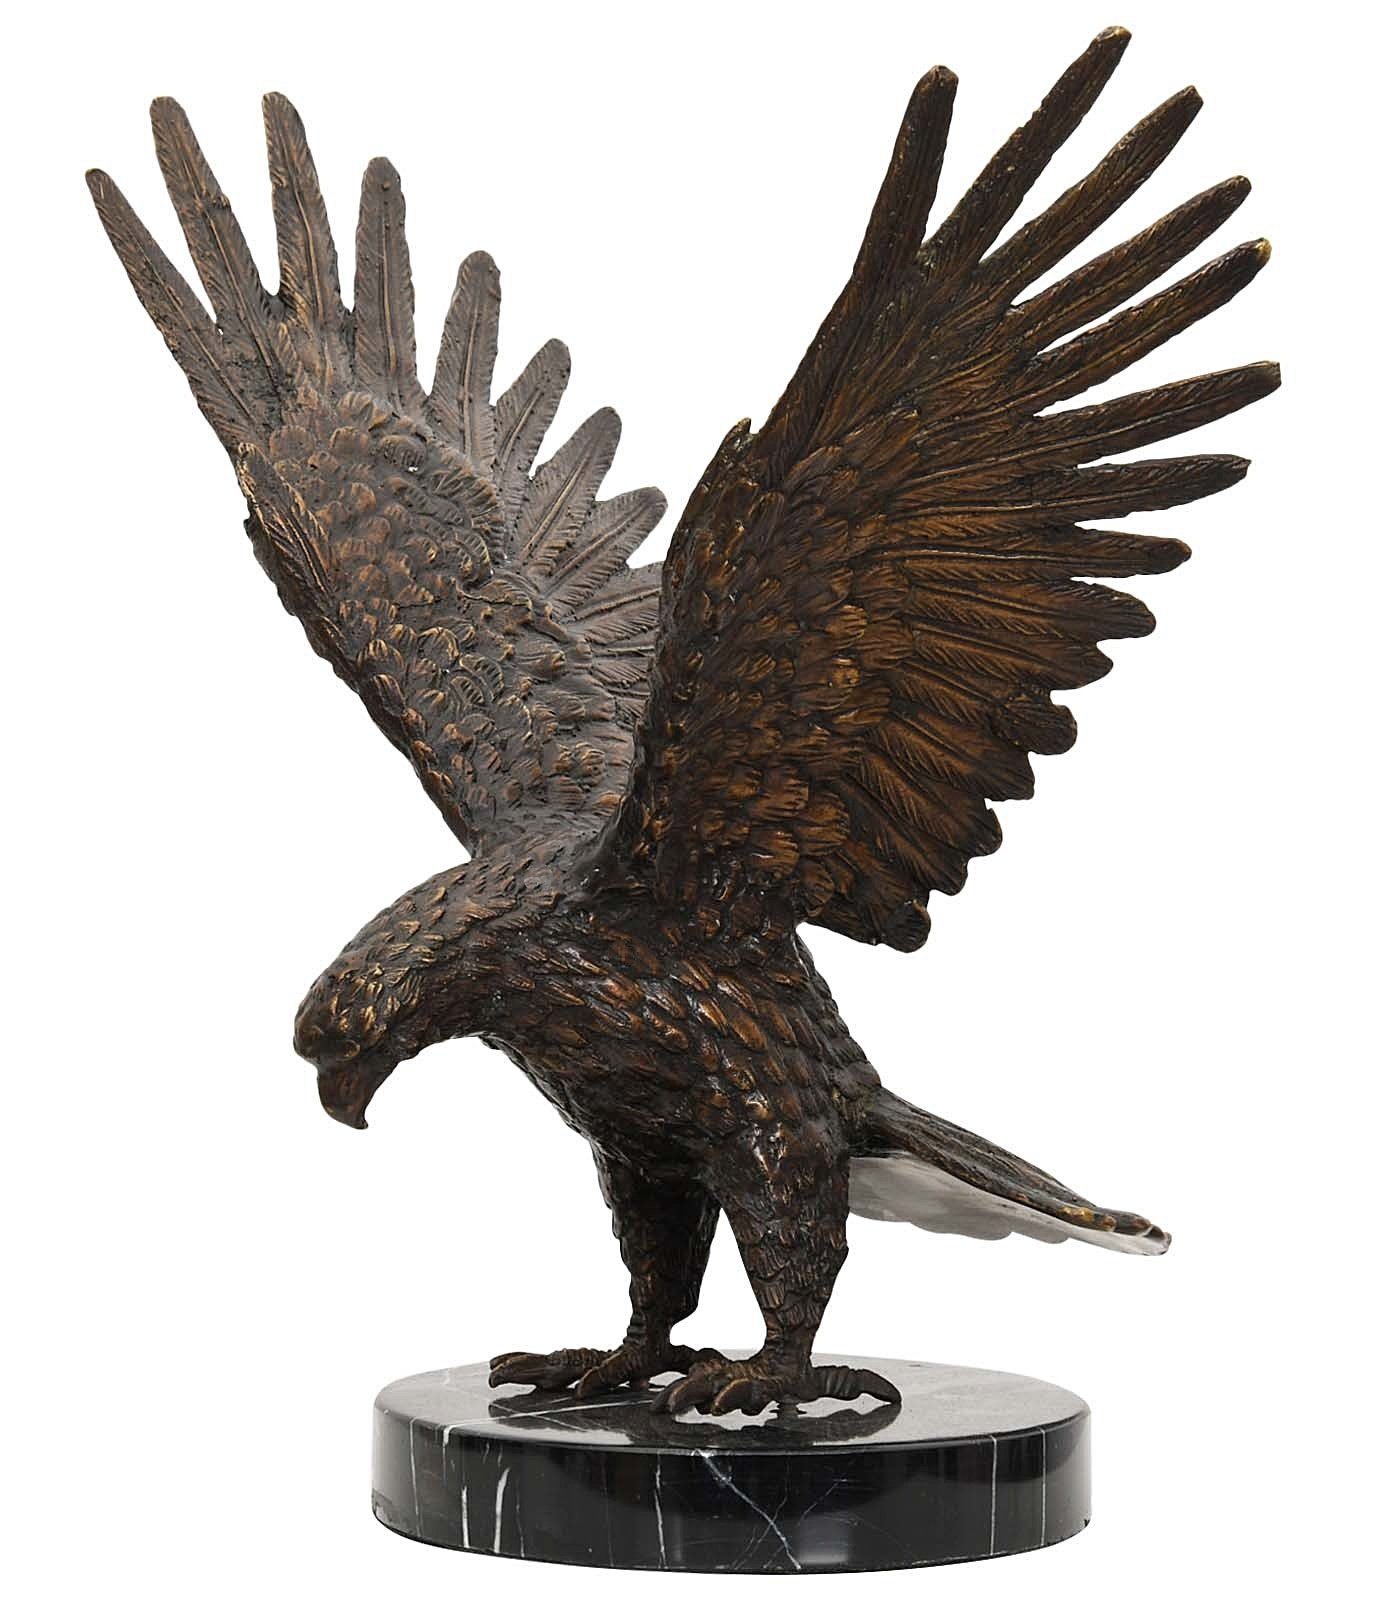 Aubaho Skulptur Bronze Skulptur Figur Adler eagle Bronzeskulptur 33cm Bronzefigur